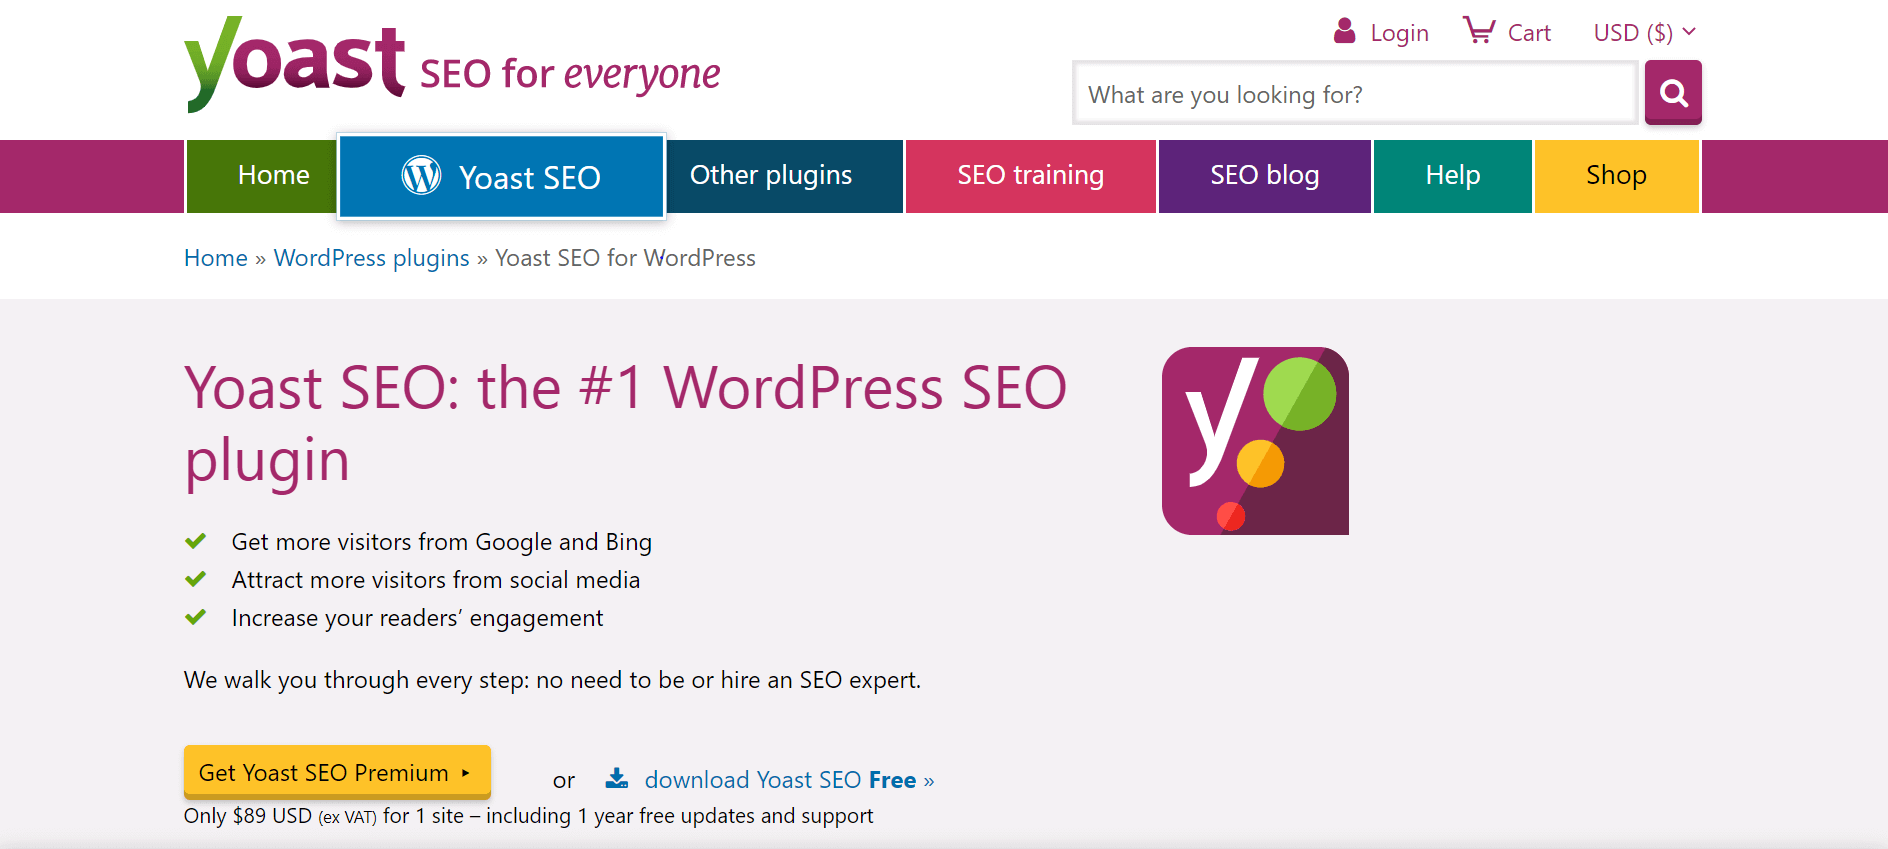 yoast-seo-wordpress-tool